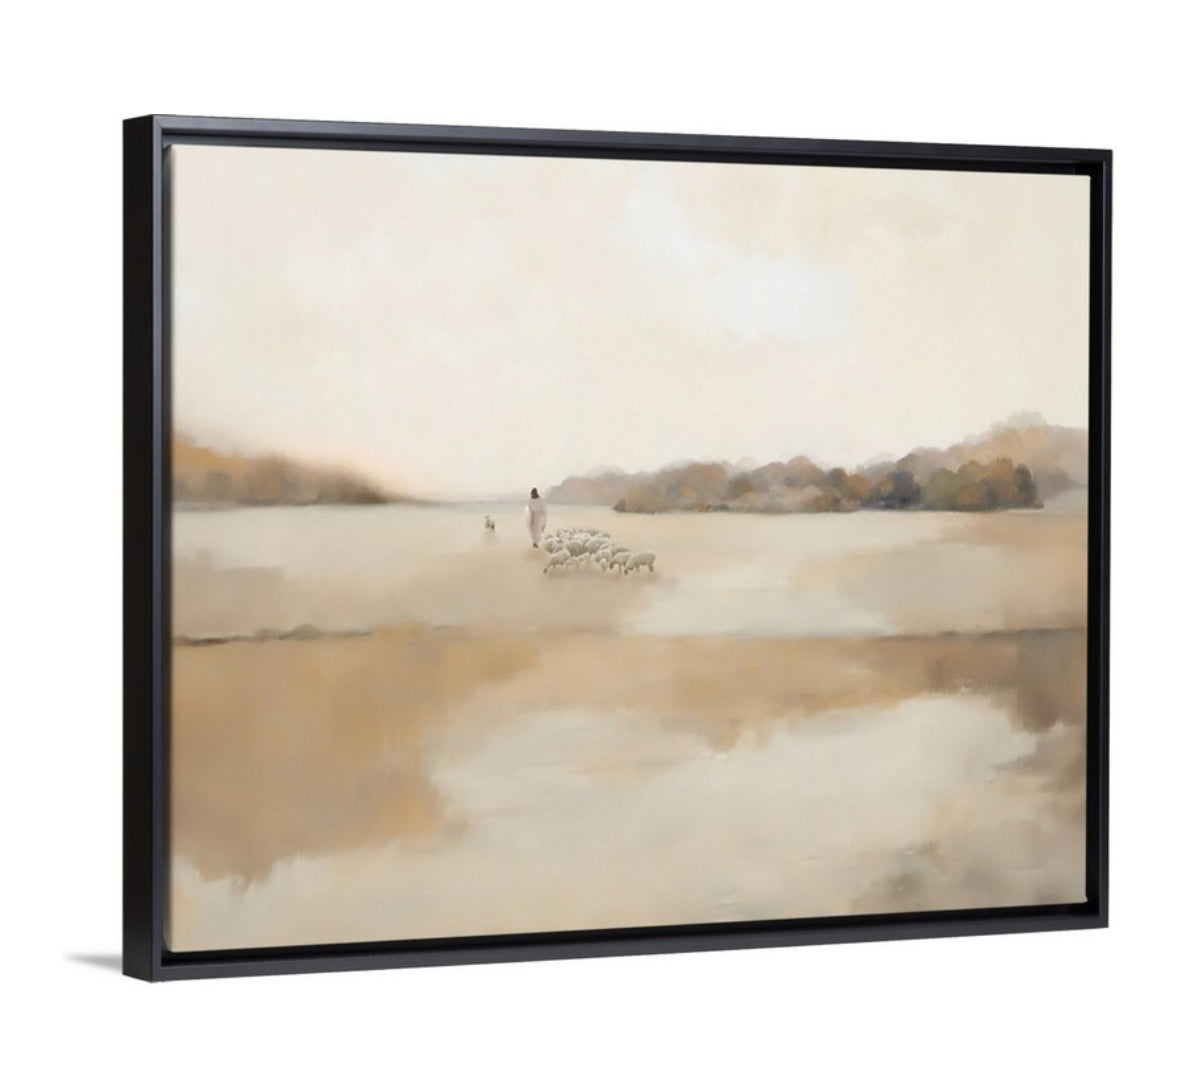 Framed Canvas Black Horizontal 1179 × 1070px